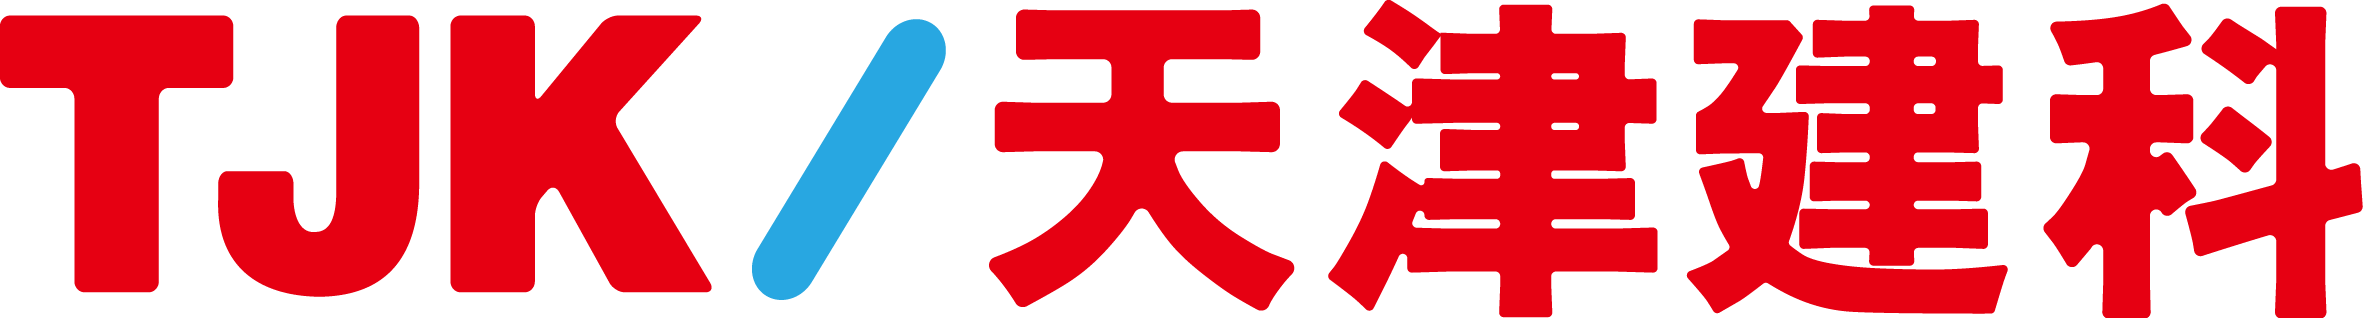 天津建科logo.png